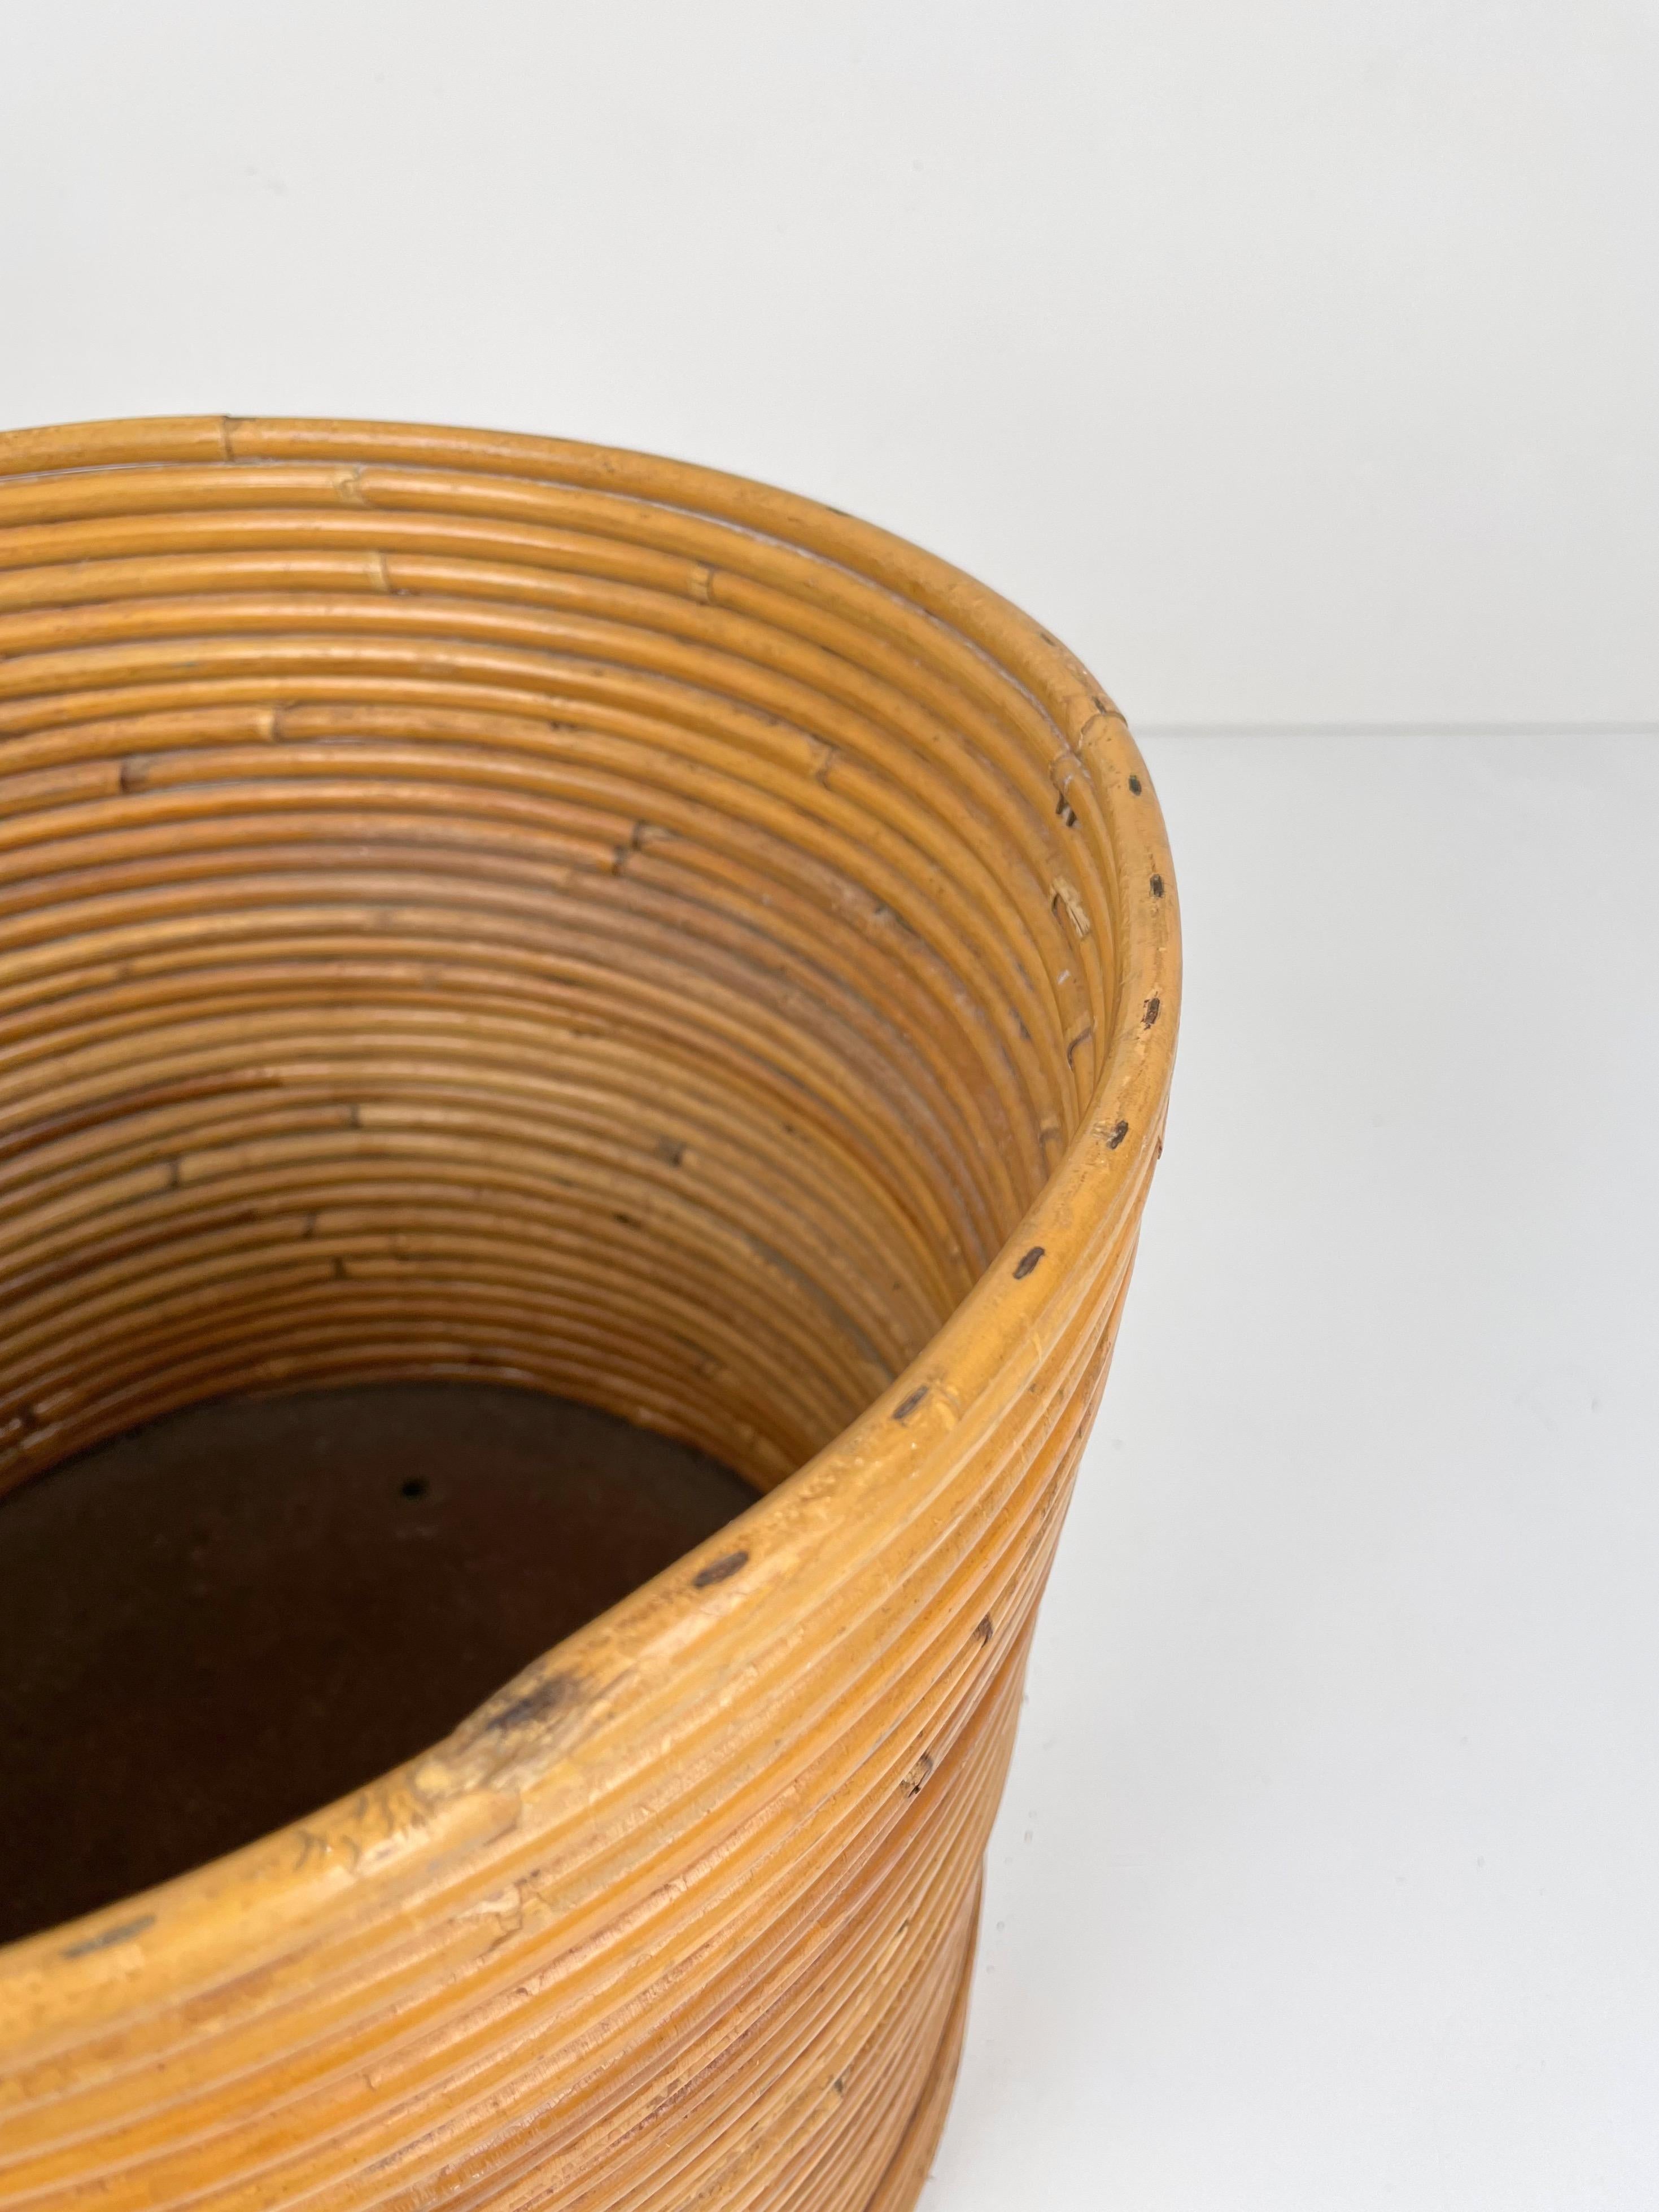 Bamboo Rattan Basket Vase, Italy, 1960s